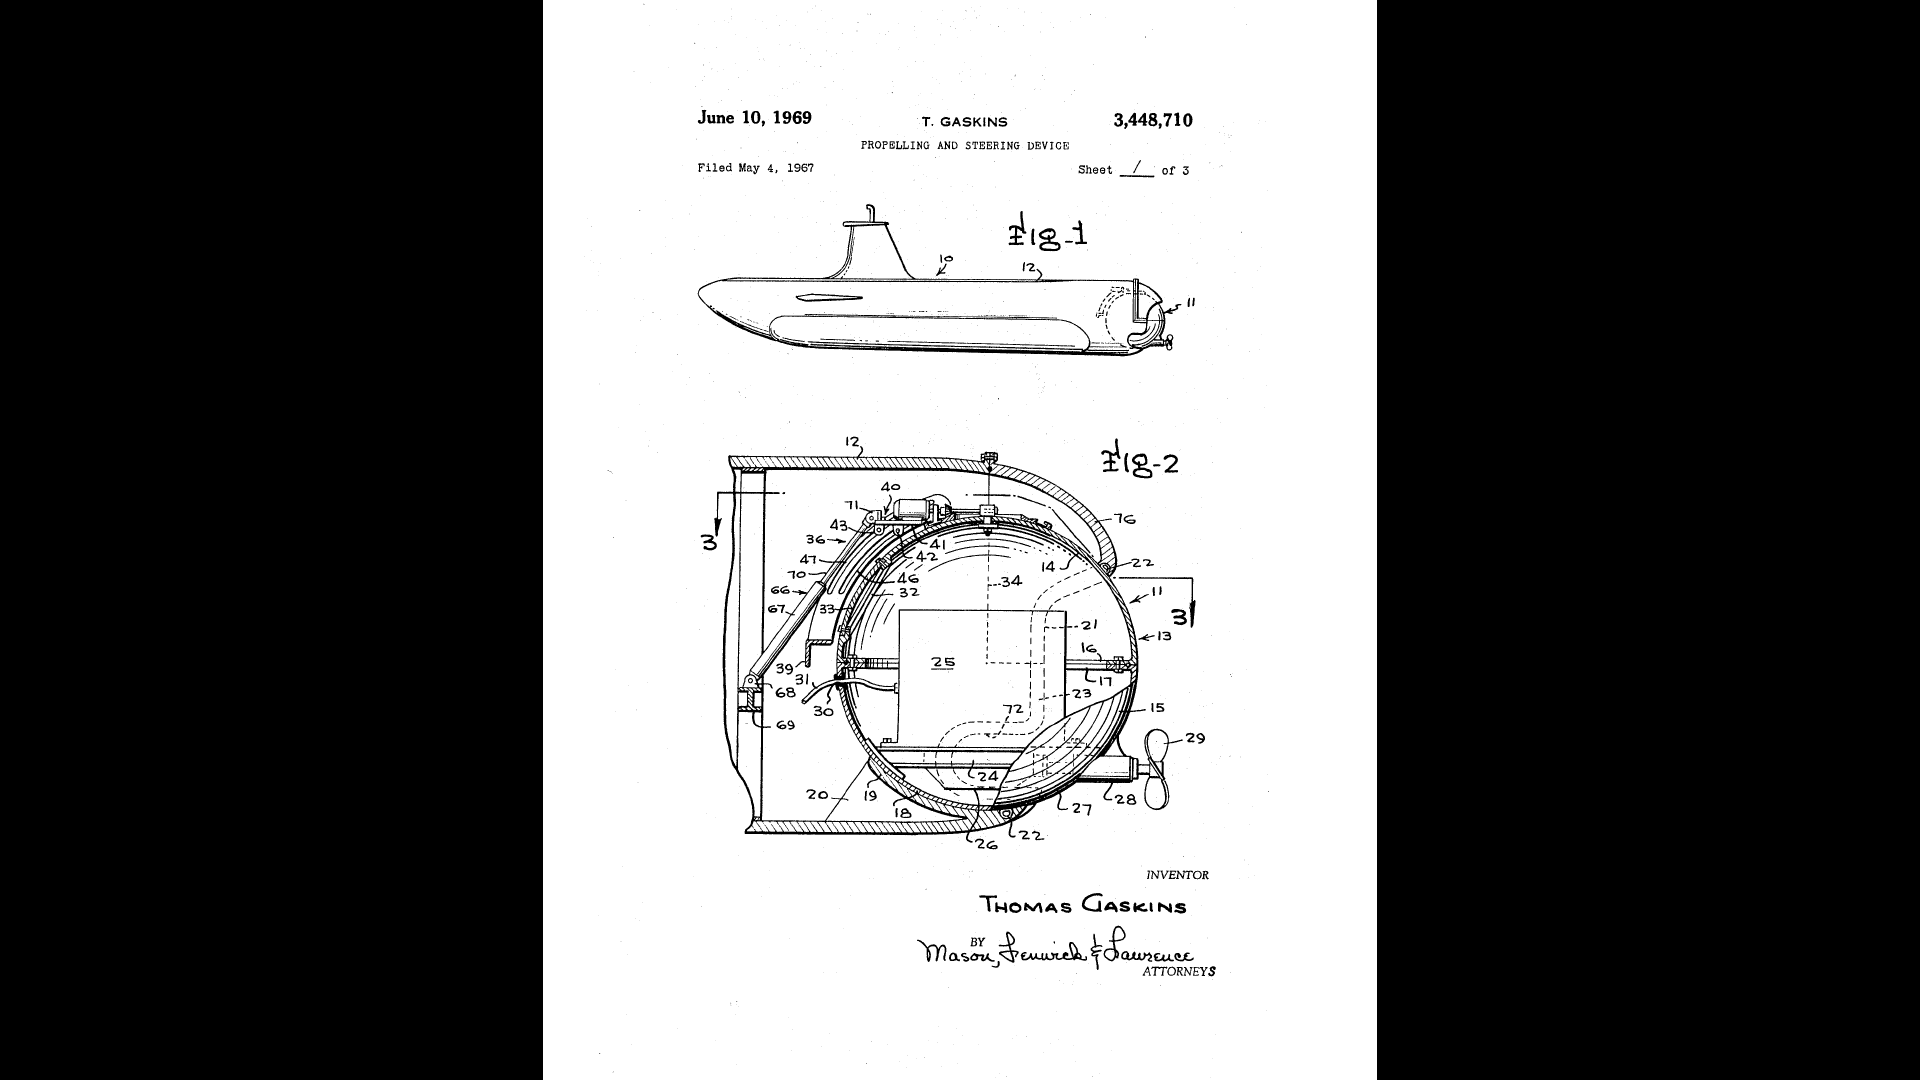 Tom Gaskins Patent No. 3,448,710 